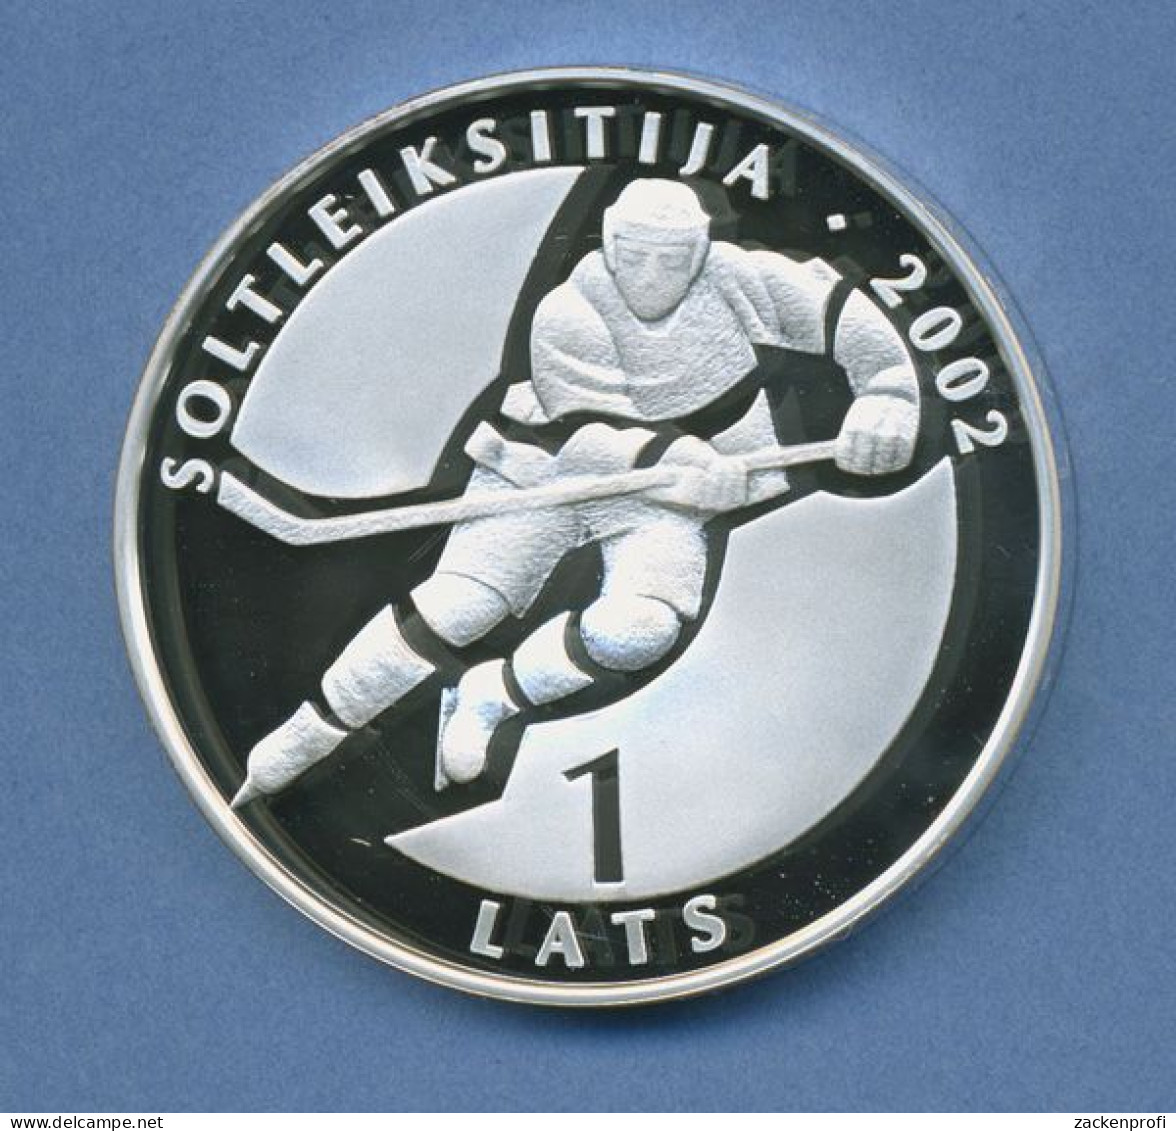 Lettland 1 Lats 2001, Silber, Eishockey, KM 50 PP (m4227) - Lettland